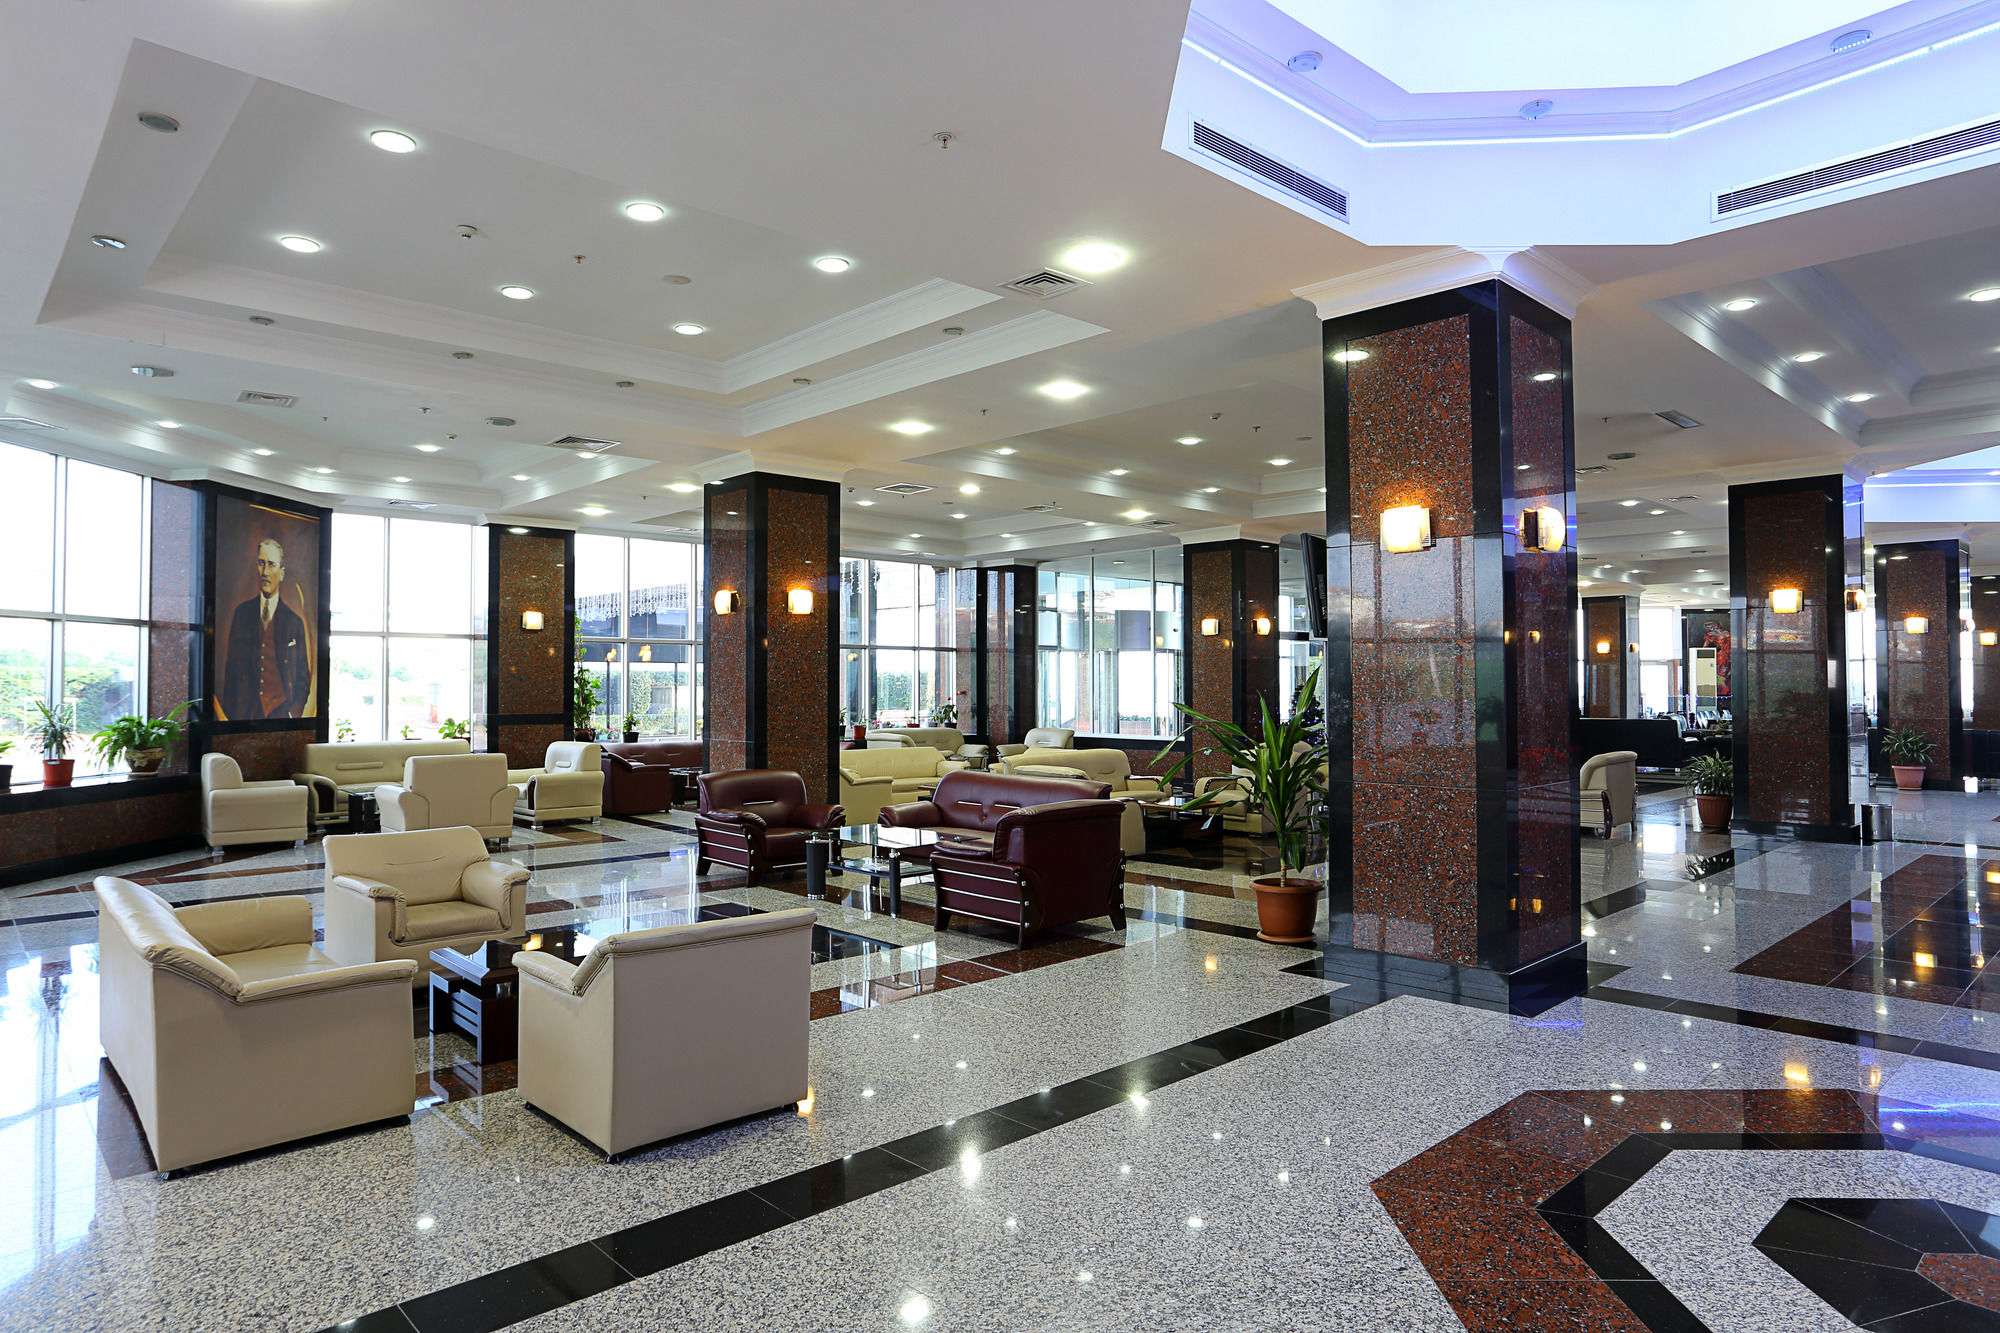 Eser Diamond Hotel & Convention Center